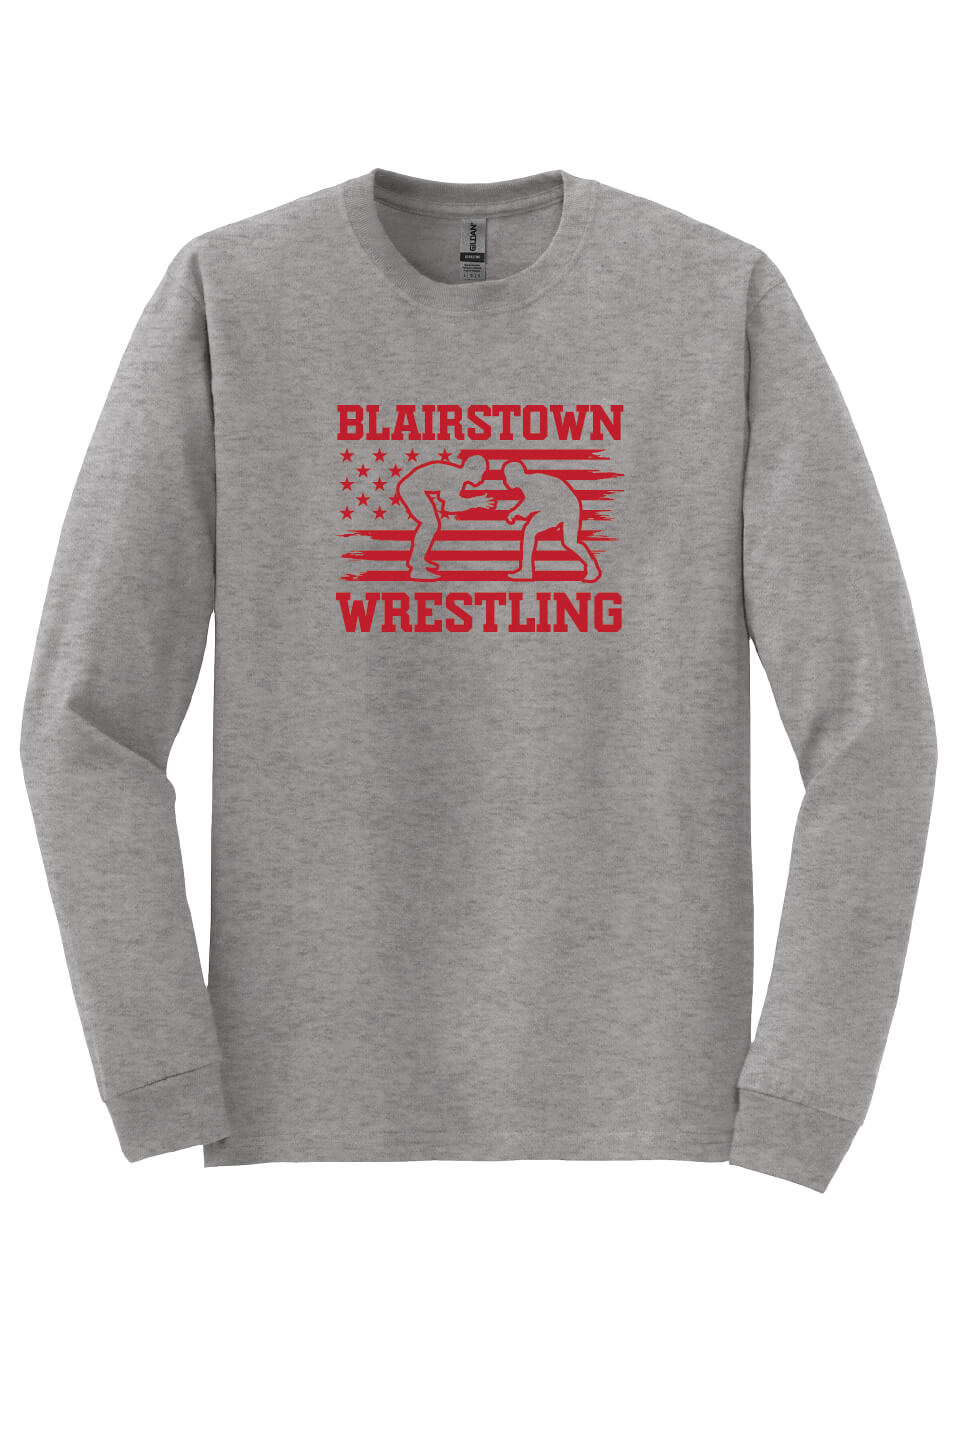 Blairstown Wrestling Flag Long Sleeve T-Shirt gray